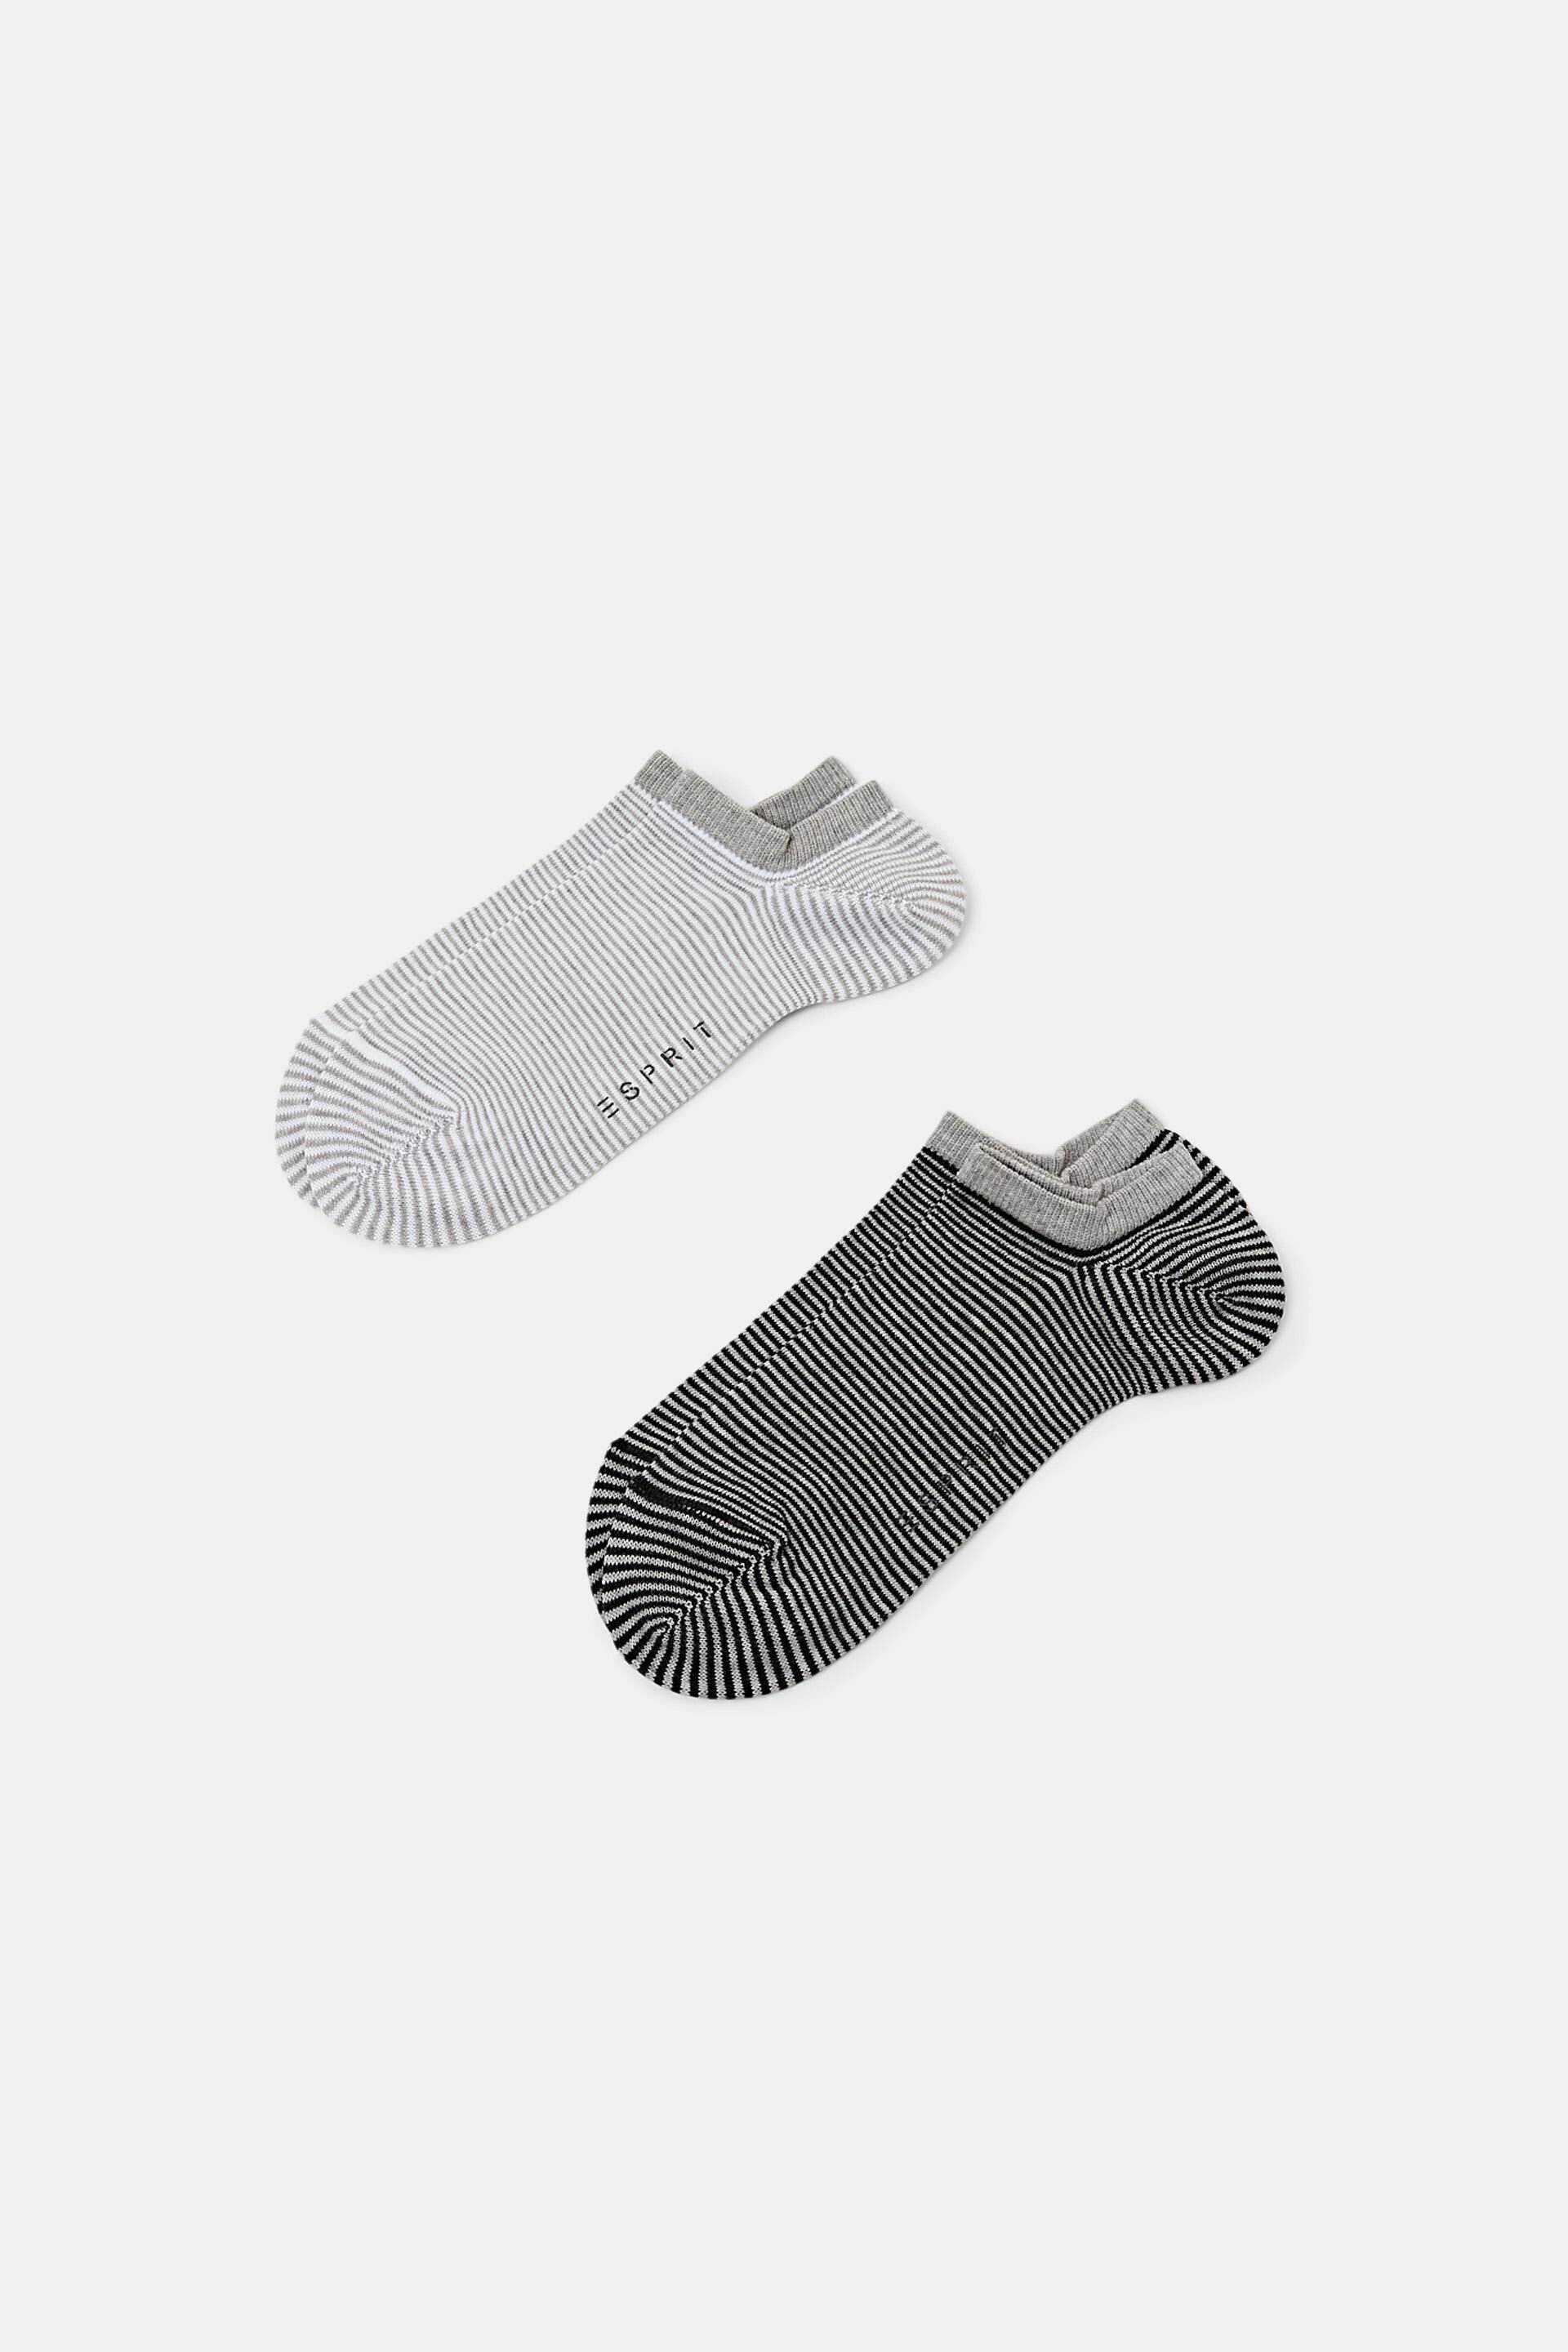 Esprit sneaker socks, organic 2-pack cotton